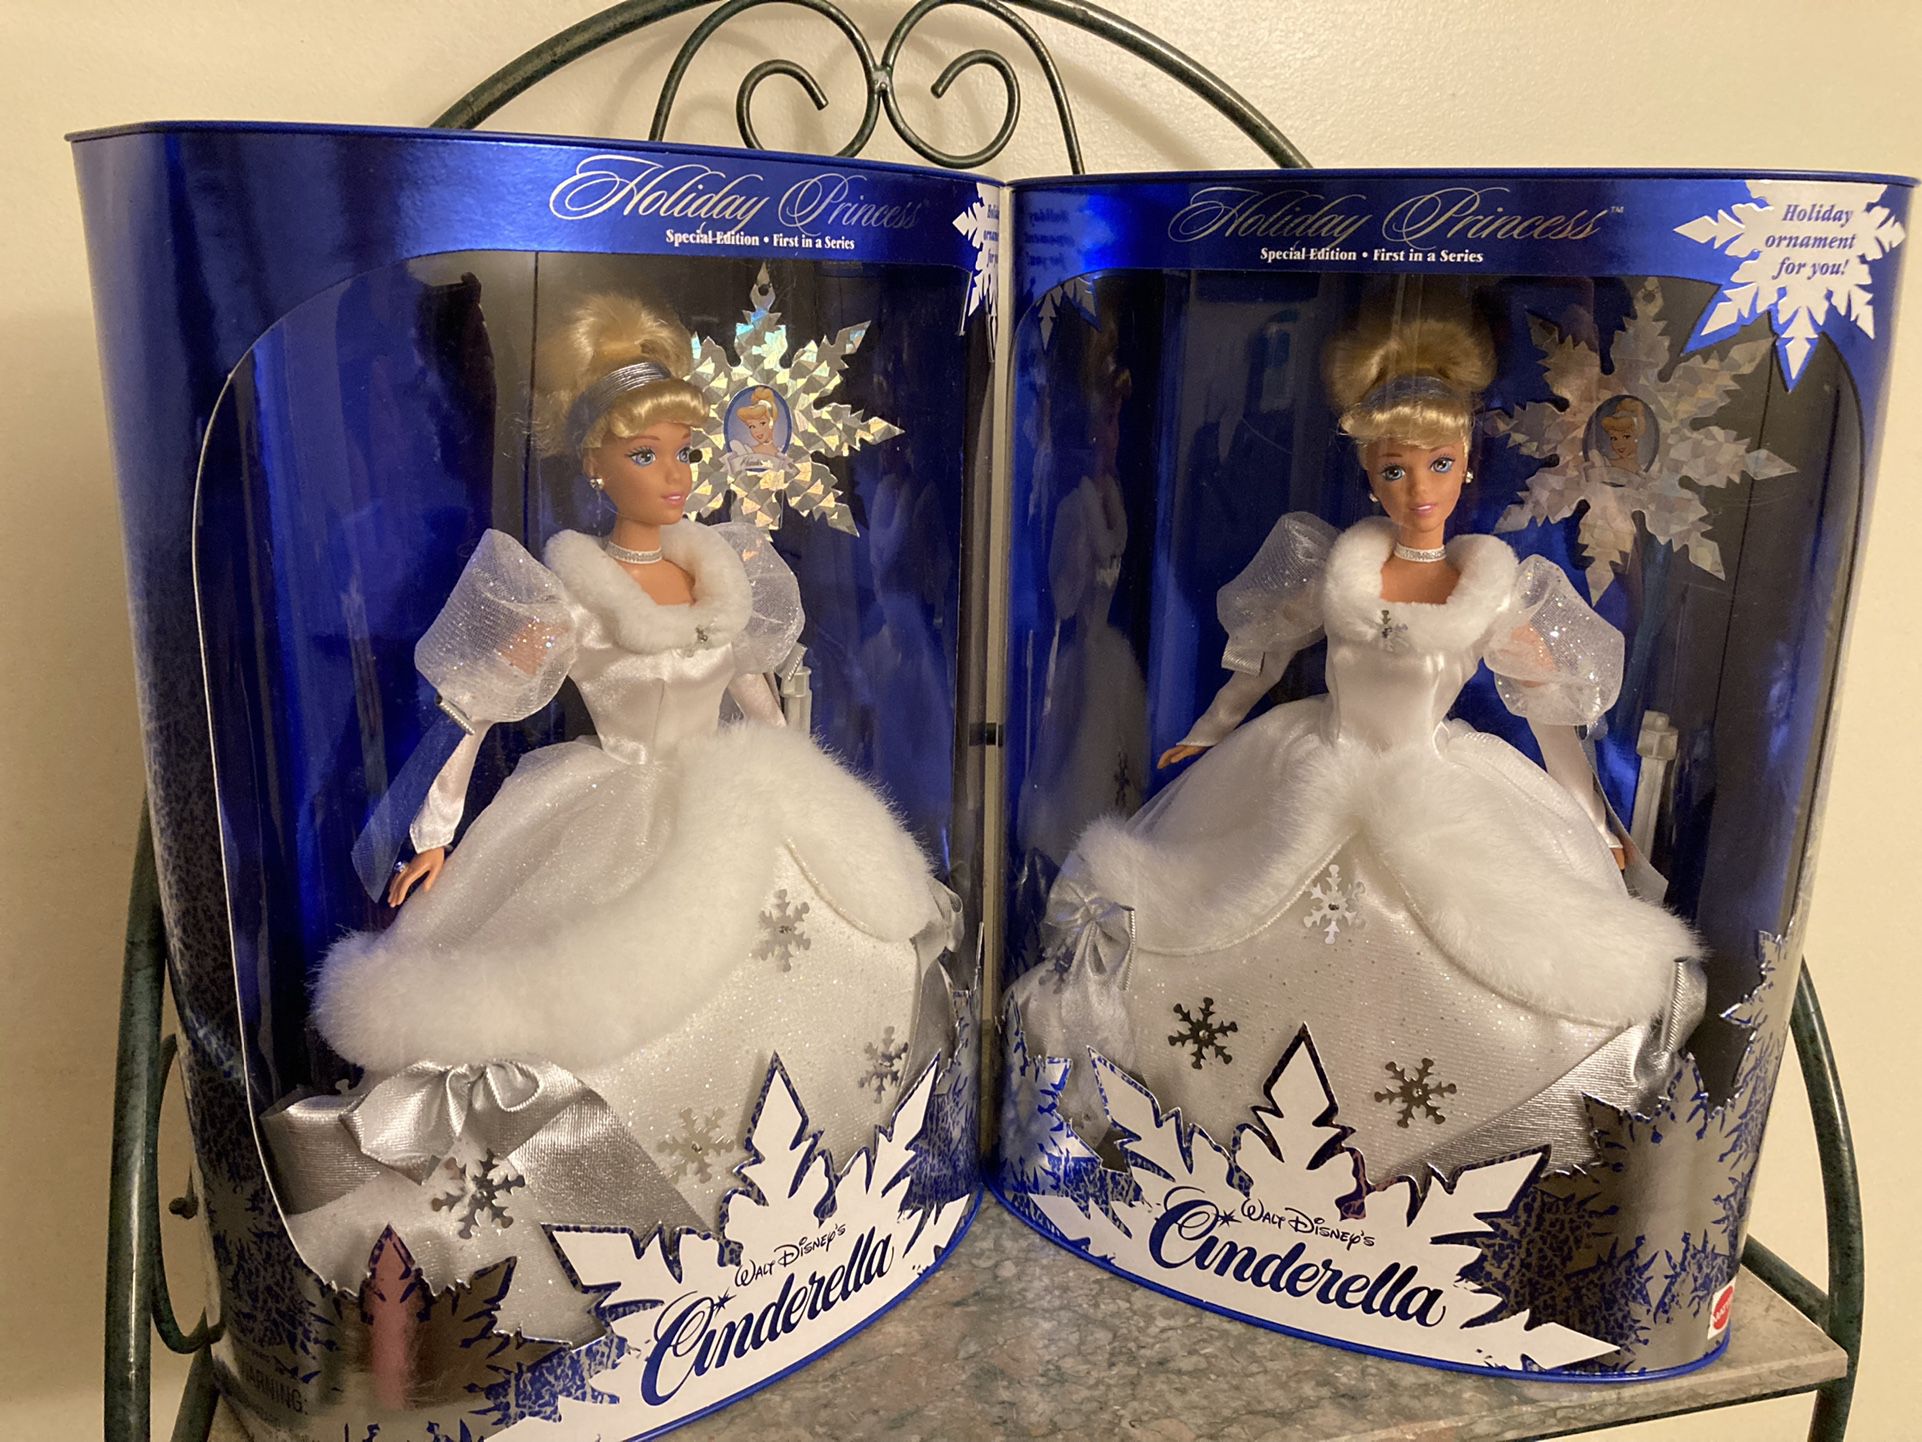 Holiday princess special edition what Disney’s Cinderella